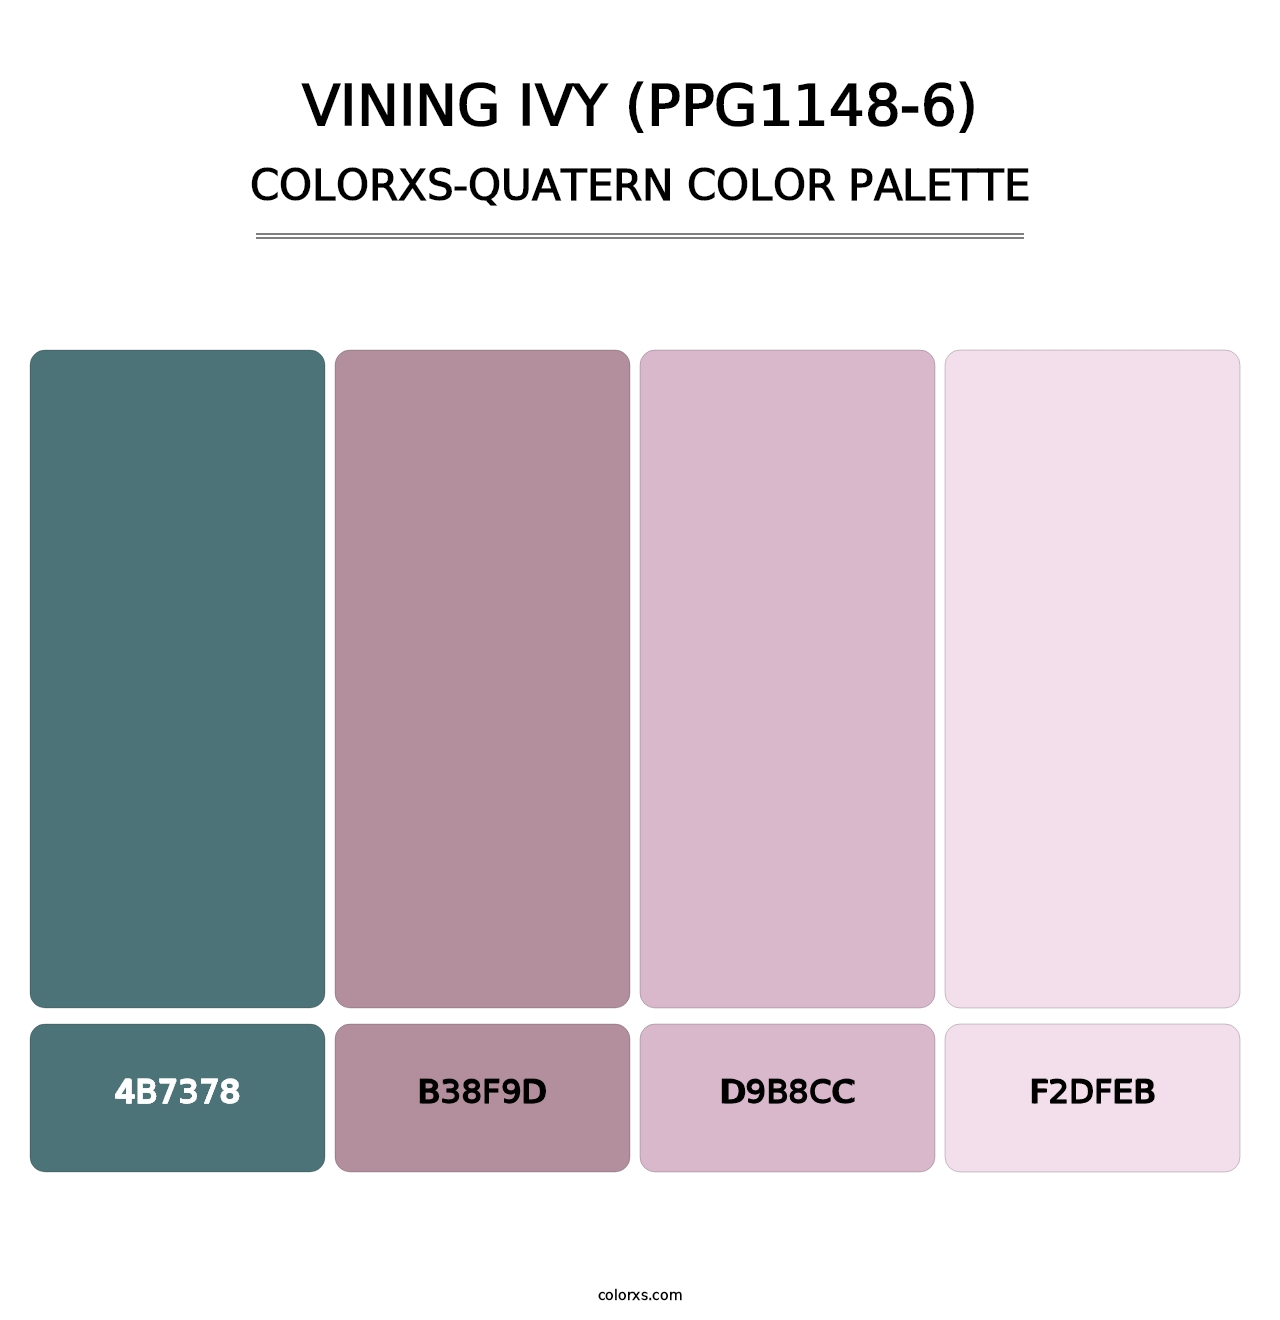 Vining Ivy (PPG1148-6) - Colorxs Quatern Palette